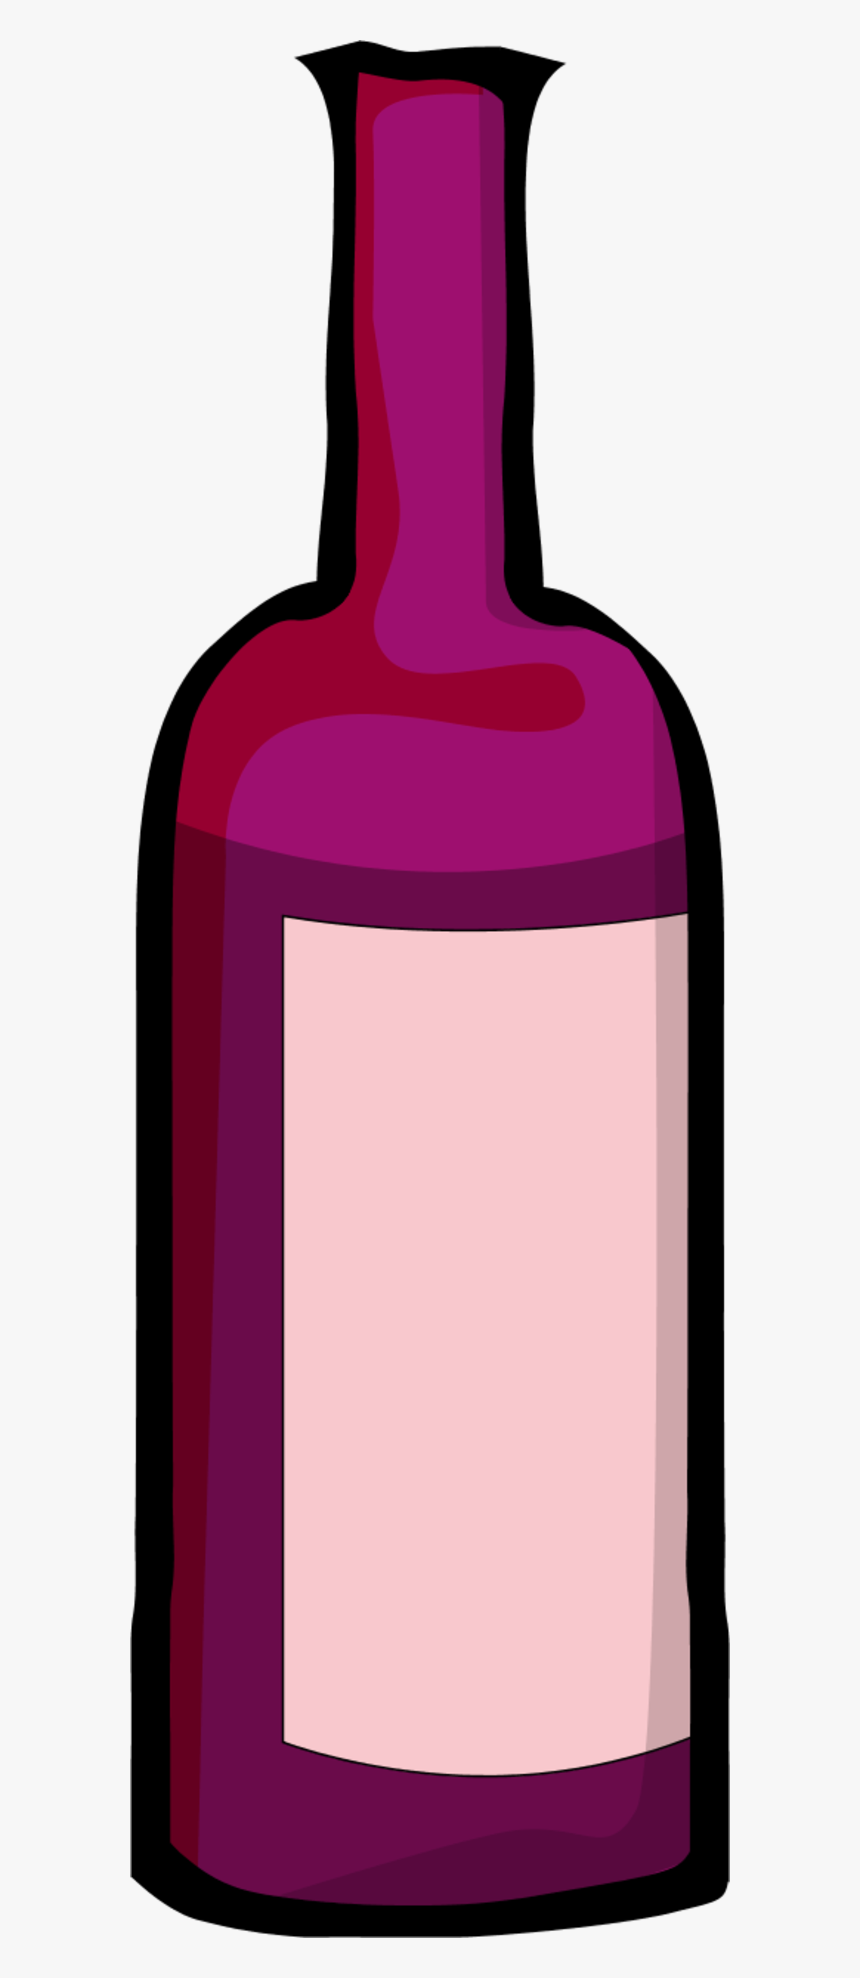 Free Download Clip Art - Wine Bottle Clip Art